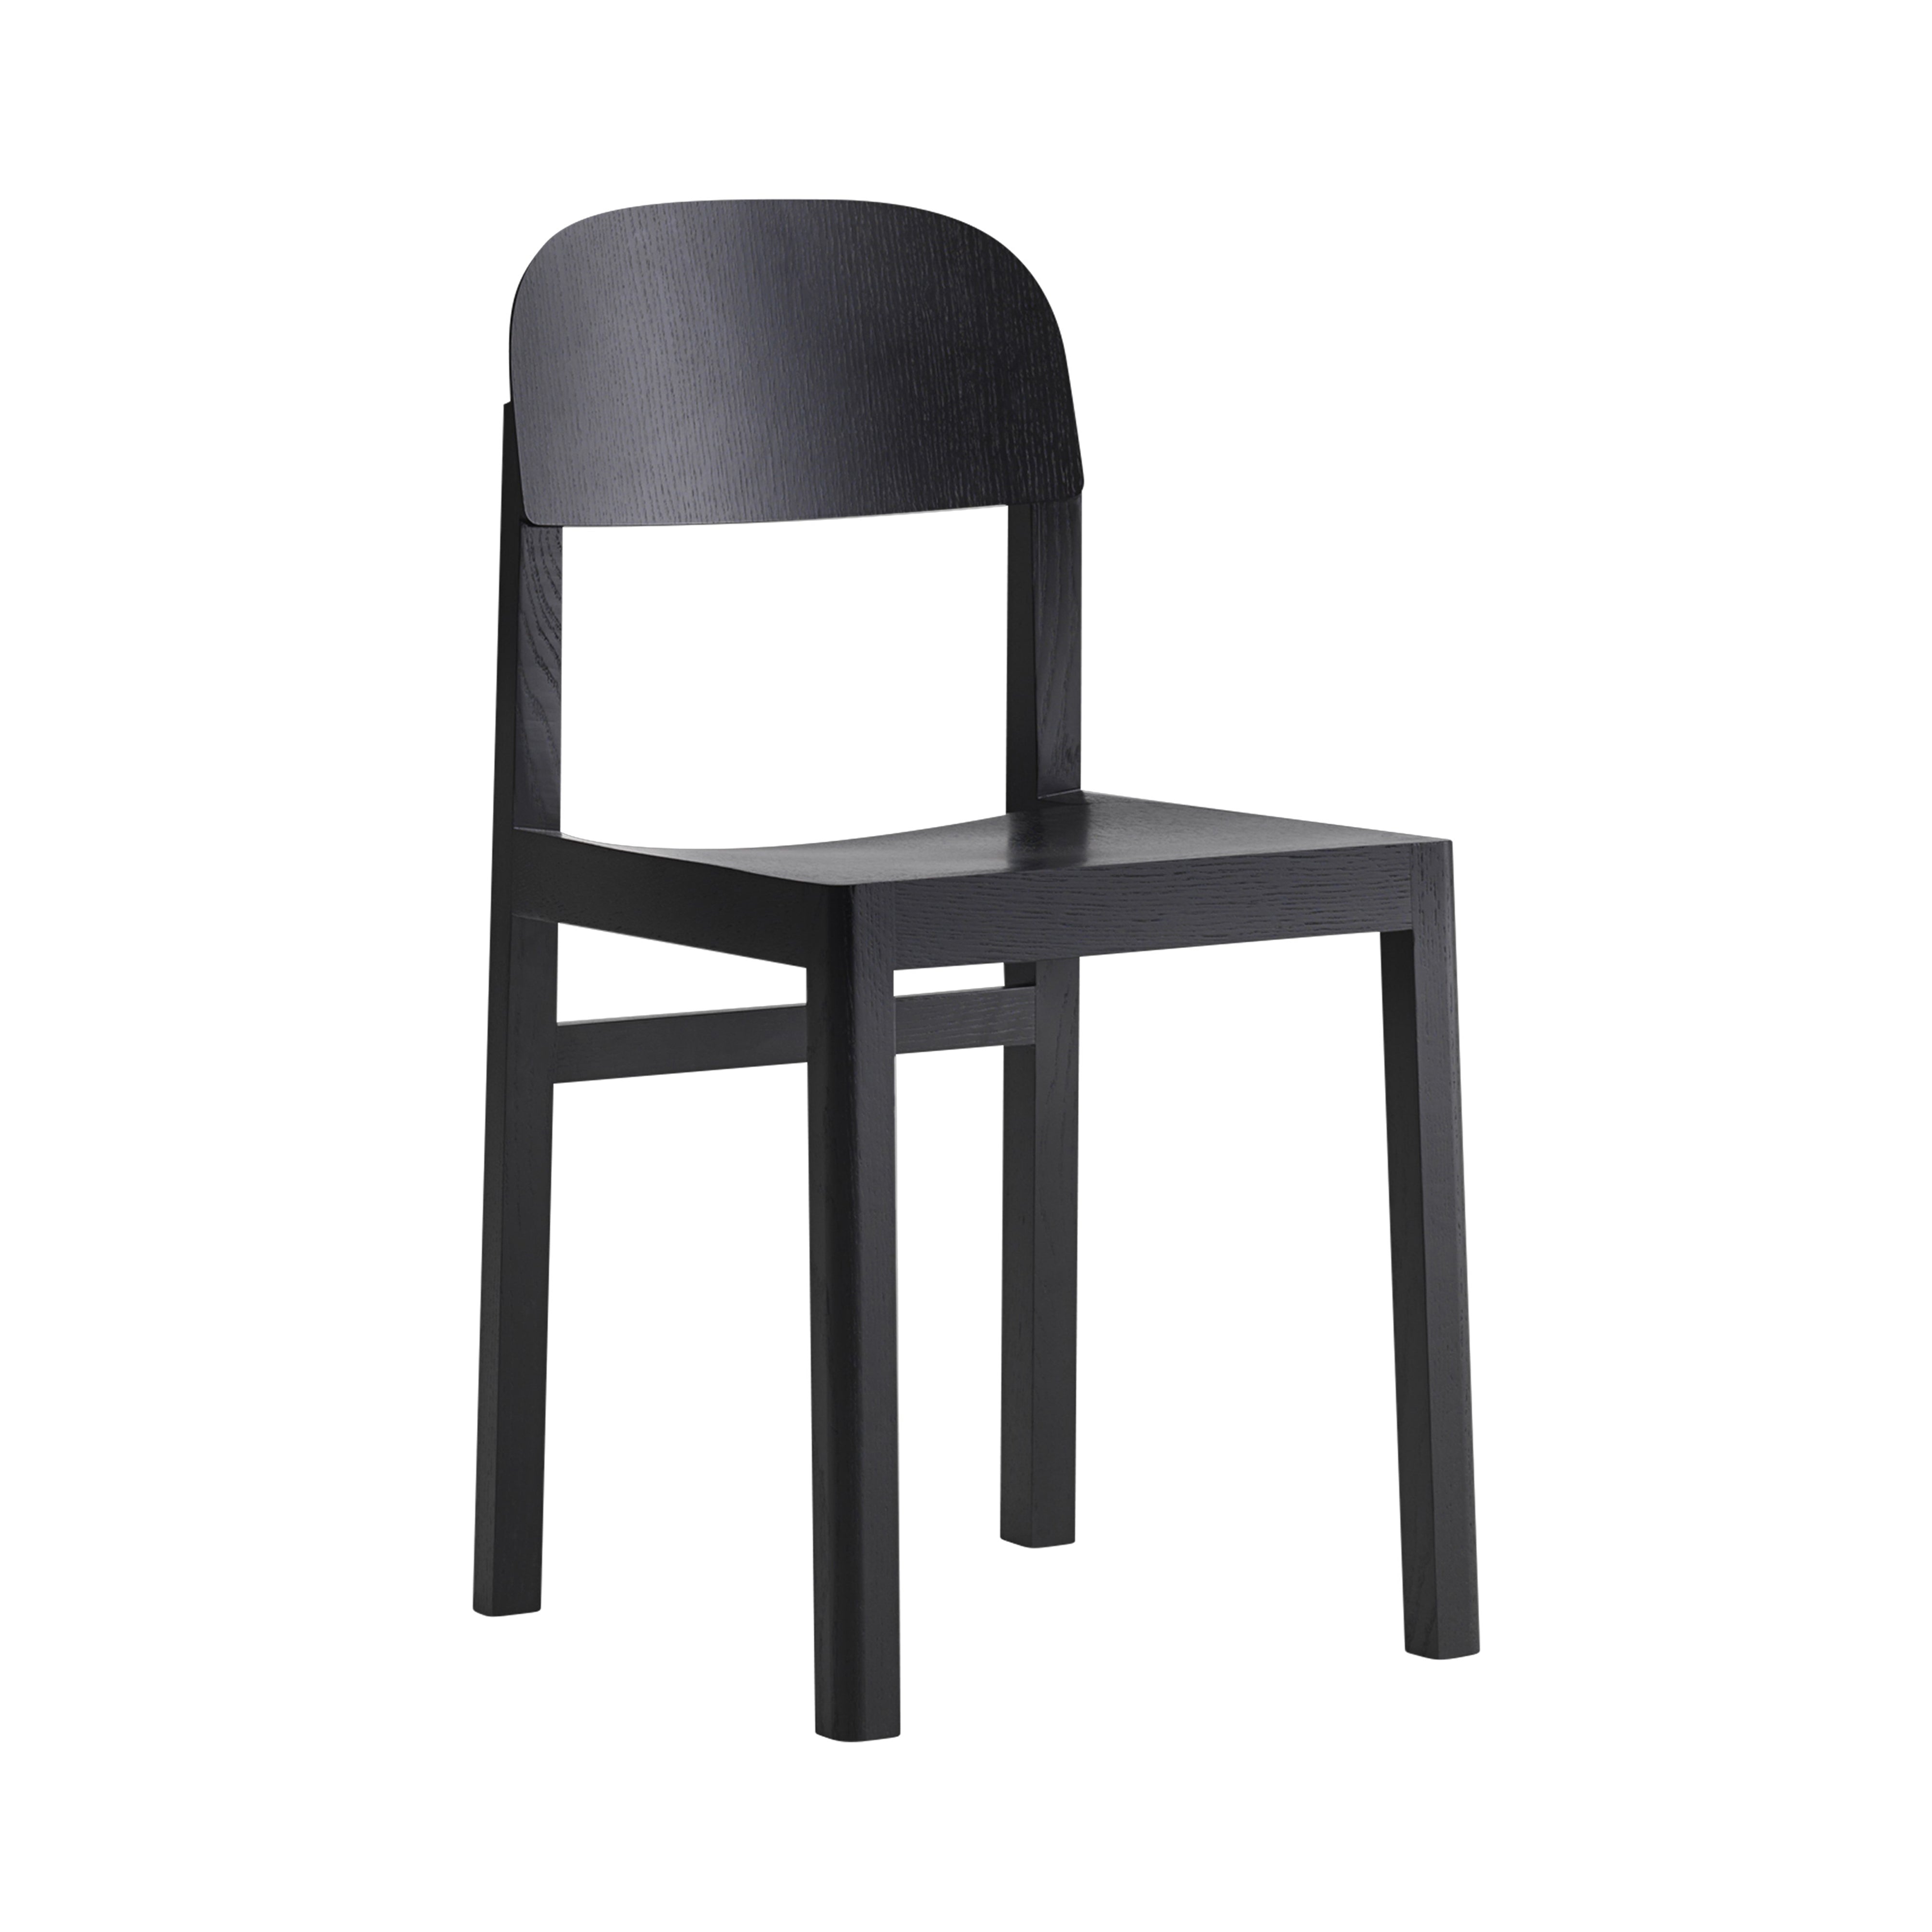 Workshop Chair: Black